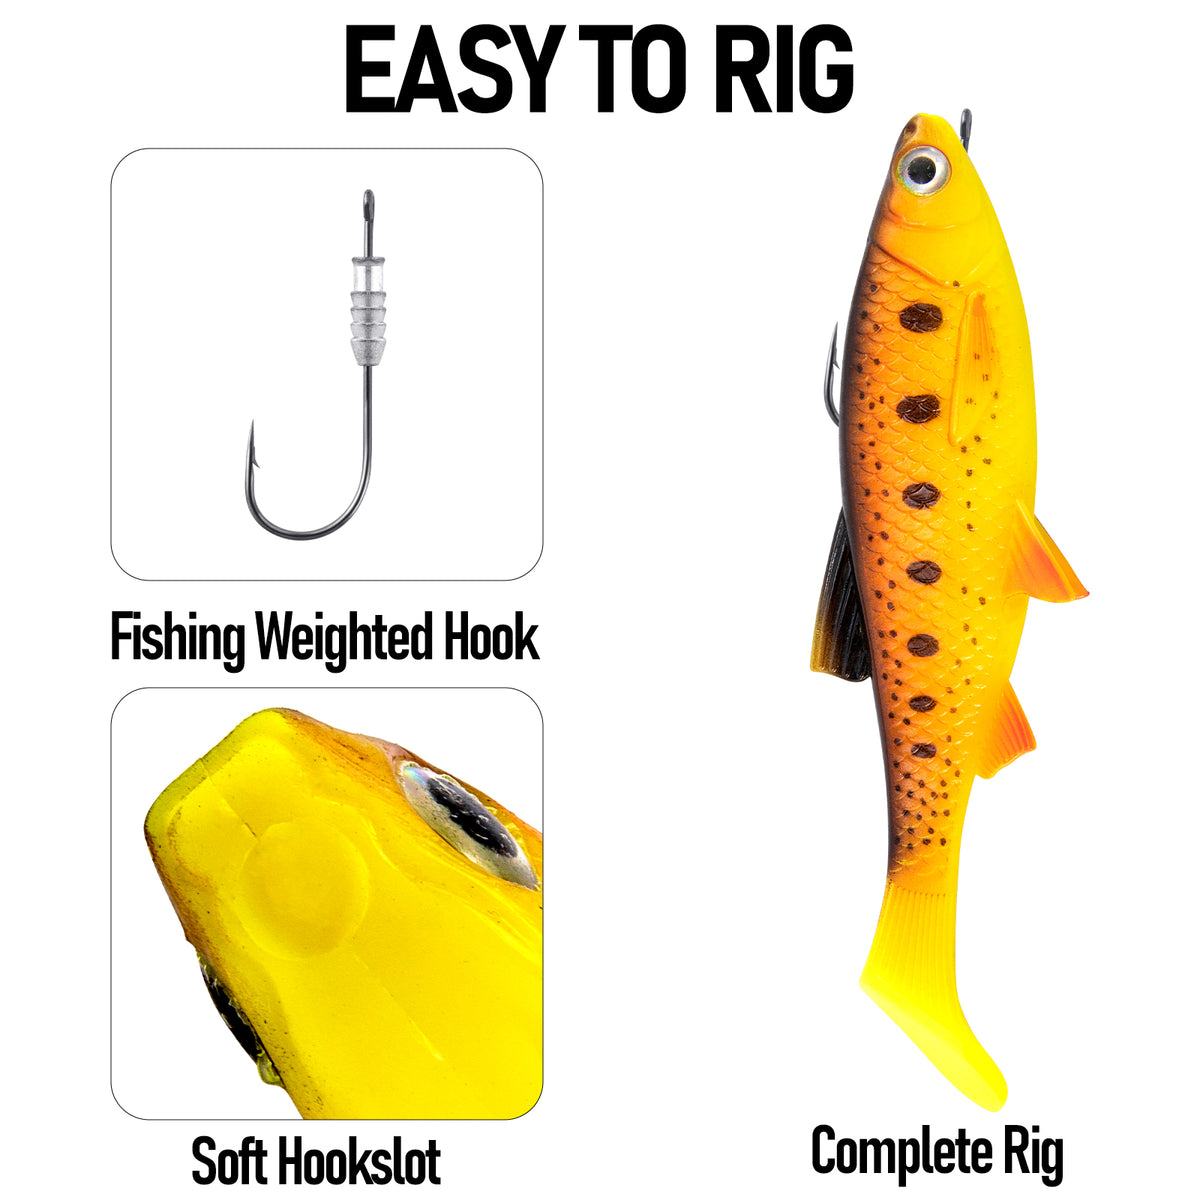 Dr.Fish 2 pcs Large Soft Plastic Paddle Tail  Lures 6.1"